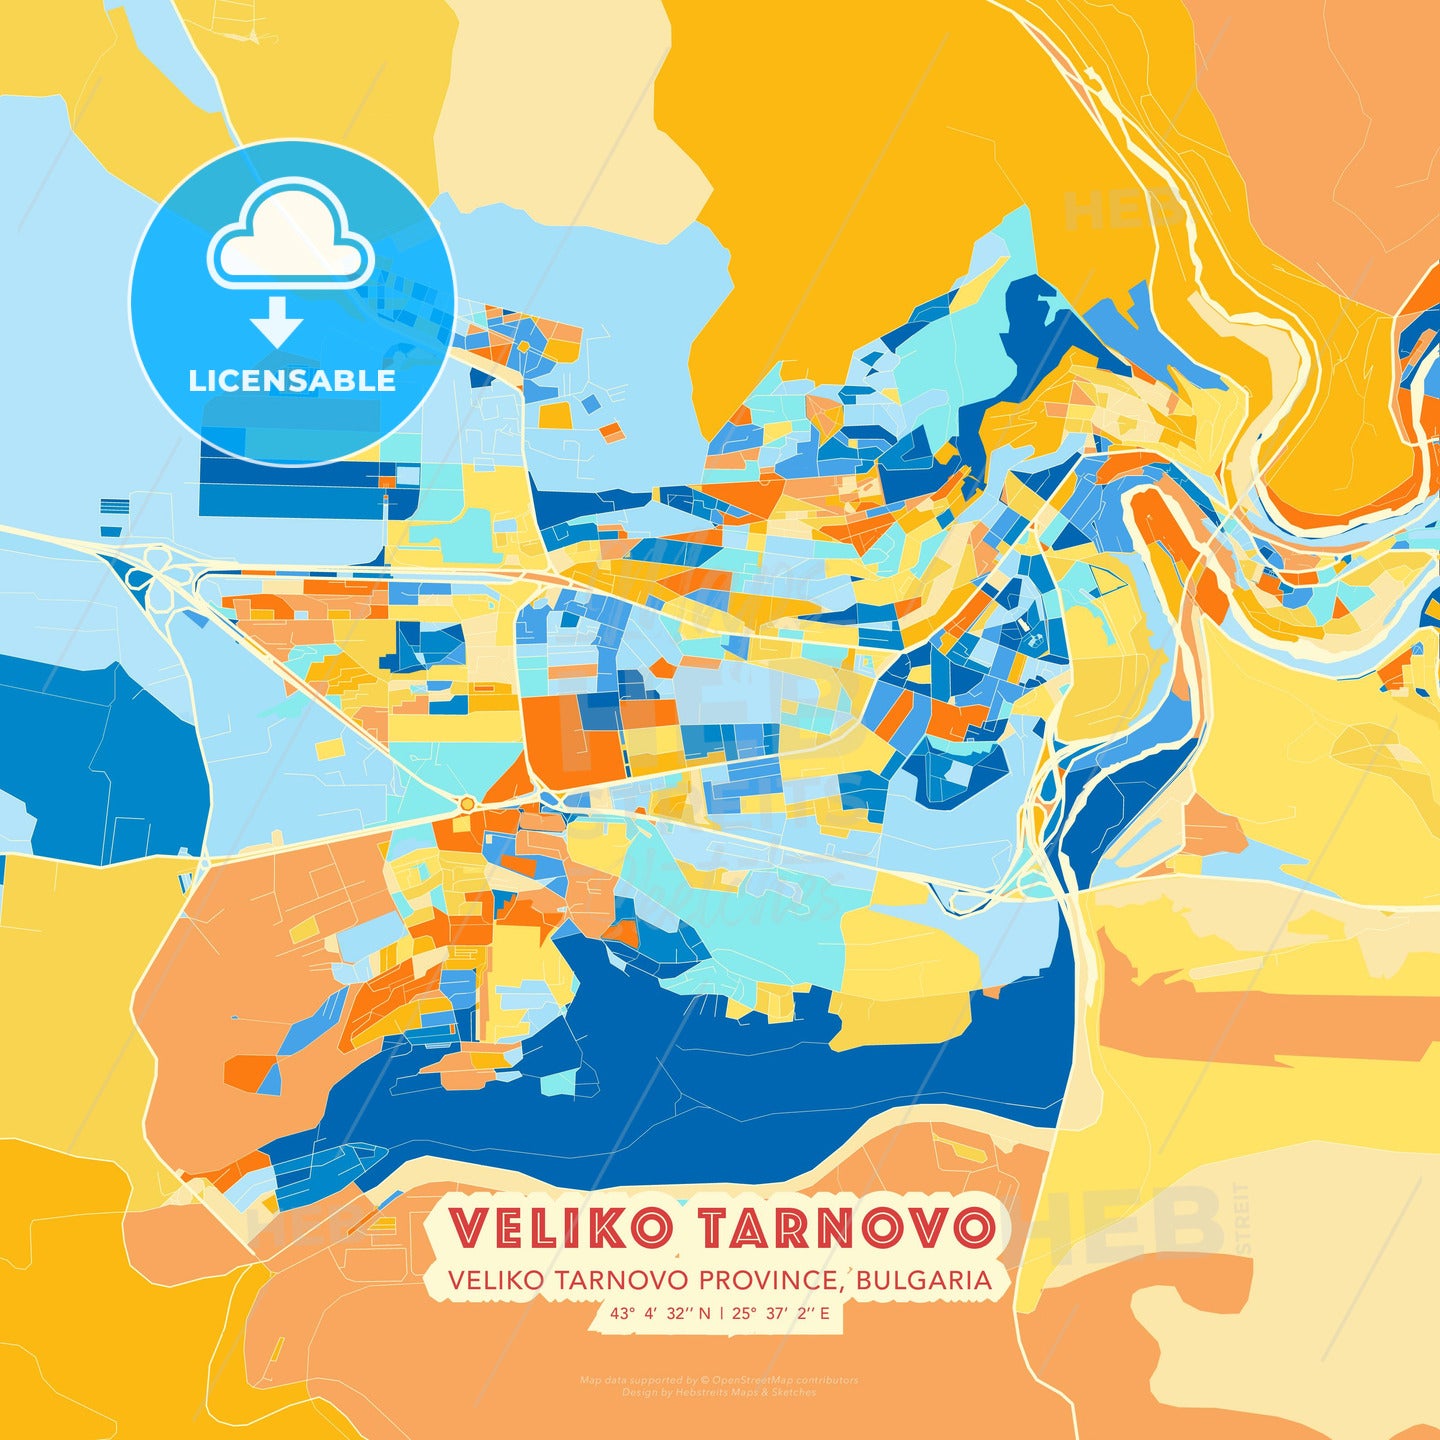 Veliko Tarnovo, Veliko Tarnovo Province, Bulgaria, map - HEBSTREITS Sketches